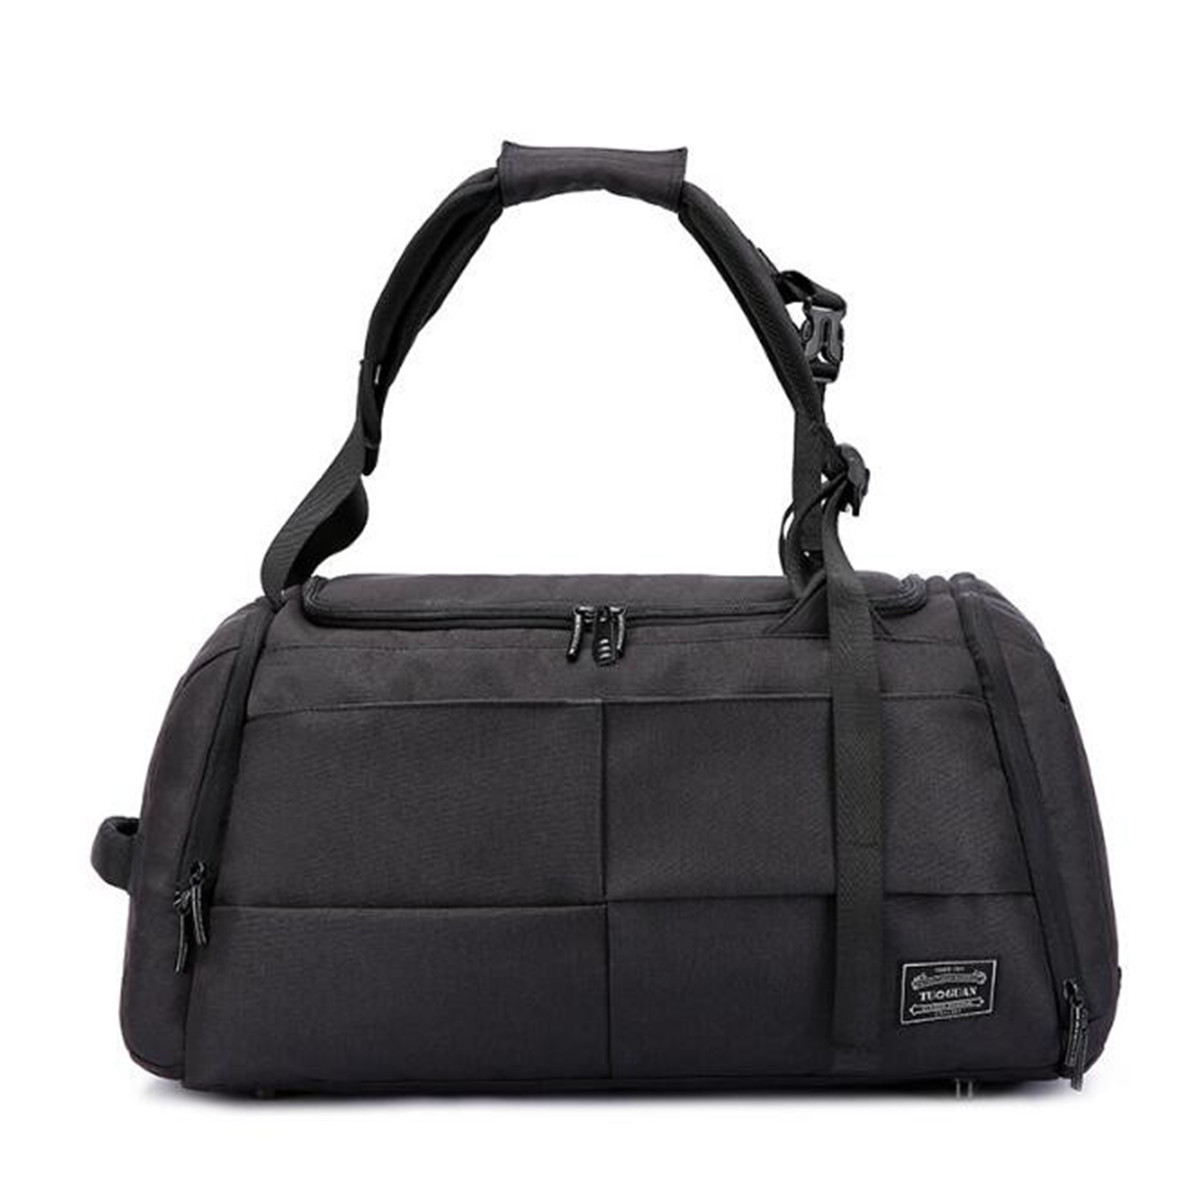 Outdoor-Men-Women-Luggage-Travel-Bag-Satchel-Shoulder-Gym-Sports-Handbag-with-Shoes-Storage-1279187-4